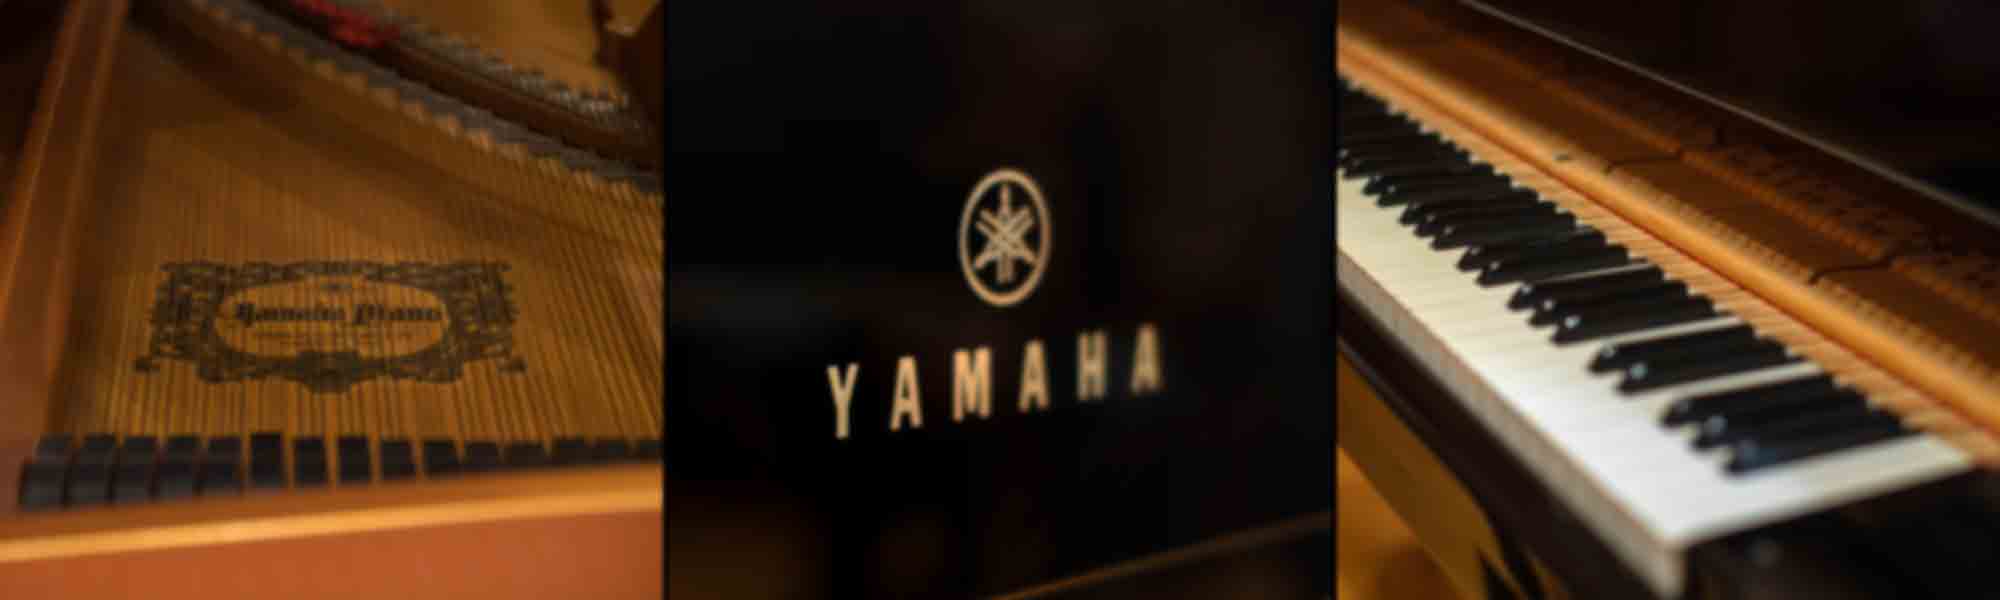 Yamaha CFIII concert grand piano